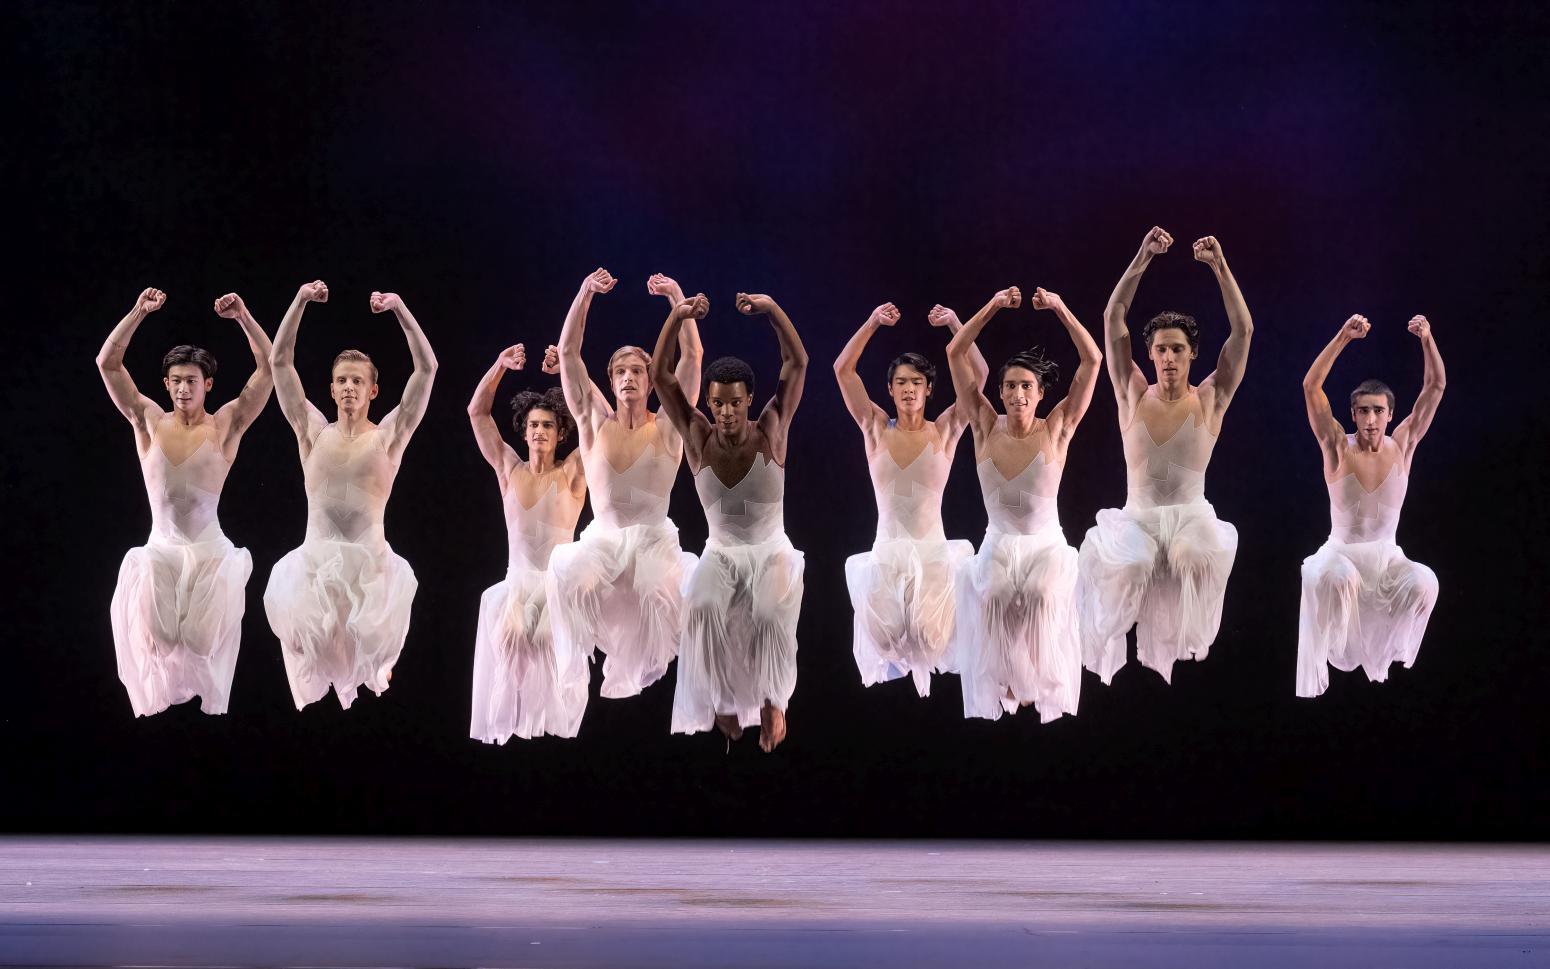 9. D.Bai, R.Catalan, M.Kumar, S.Baaij, D.R.Silva, K.Yamamoto, R.Valdez, J.Spunda, and G.Torrijos, “The Chairman Dances” by T.Brandsen, Dutch National Ballet 2023 © M.Haegeman